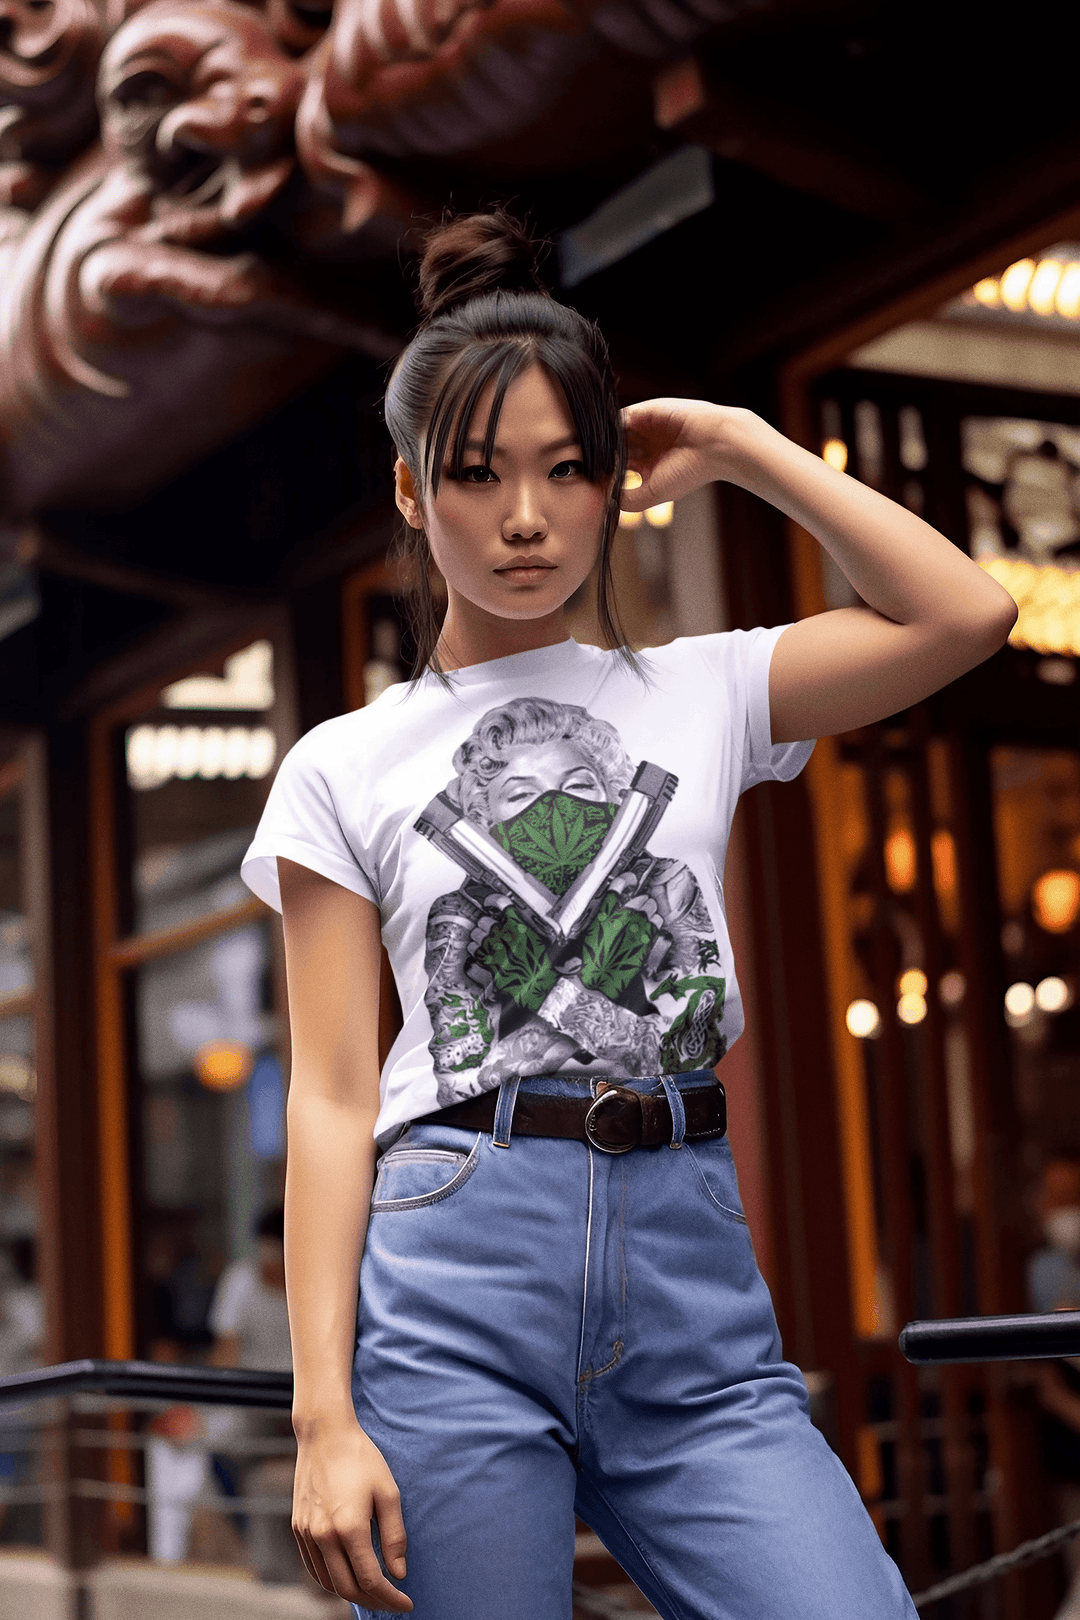 Iconic 50's Pin up Girl Portrait T-Shirt Weed Bandit Ultra Soft Cotton Crewnwck Unisex Top - TopKoalaTee